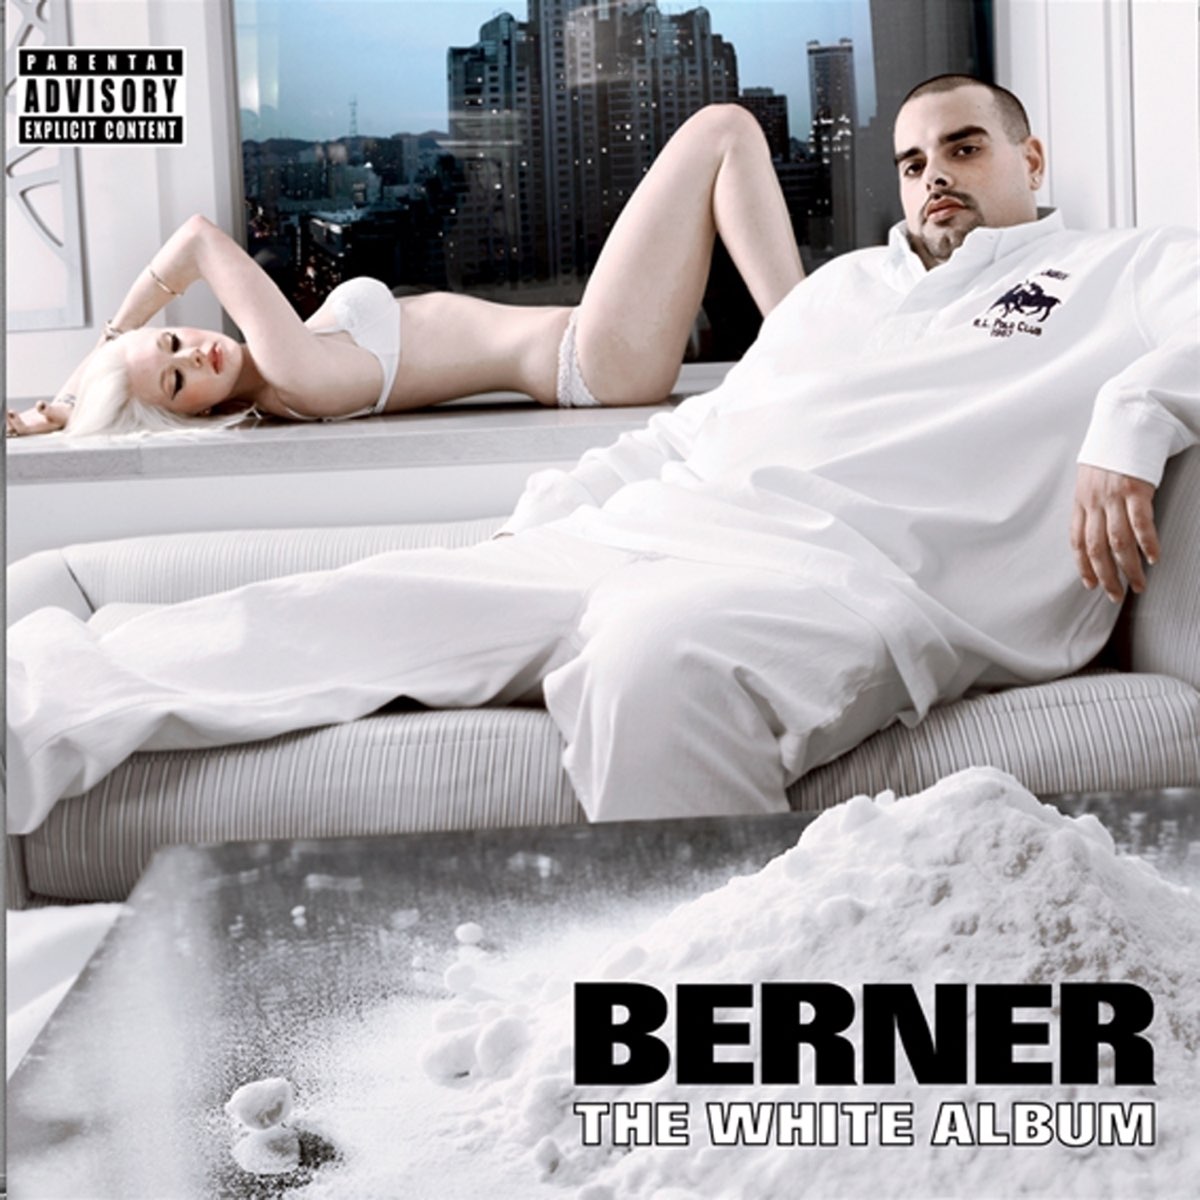 The White Album - Album by Berner - Apple Music